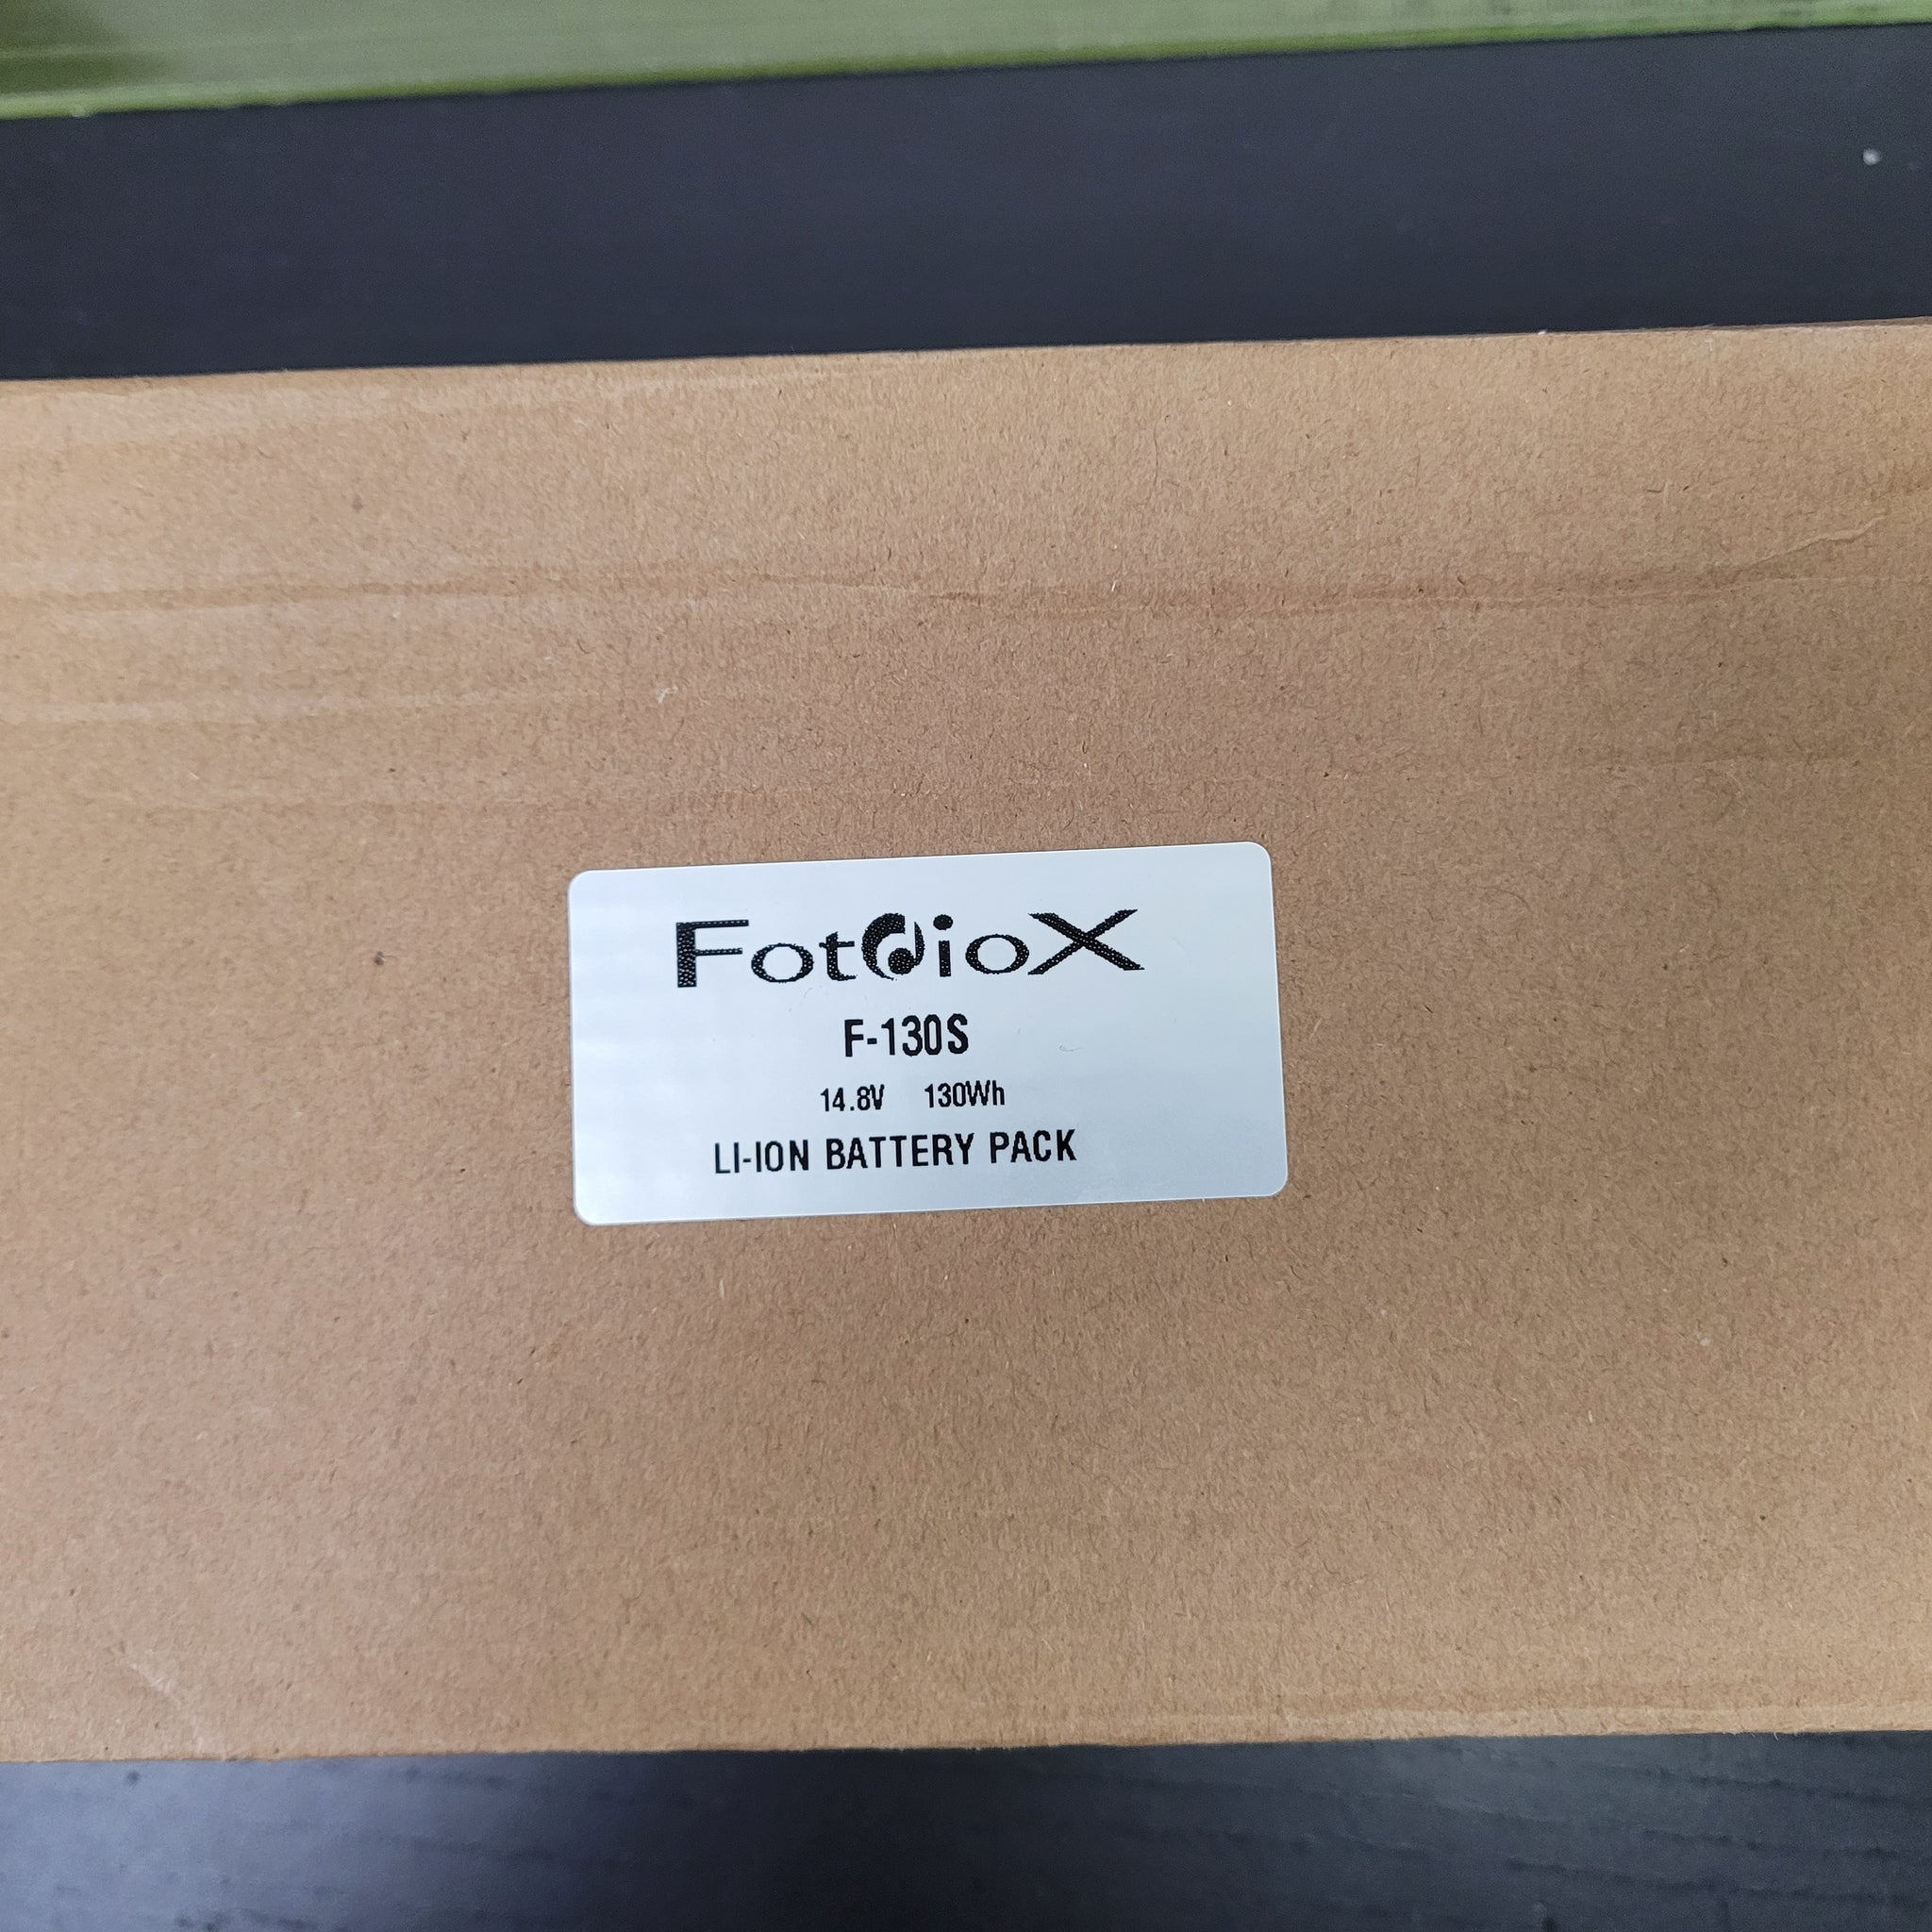 FotodioX F130S Li-Ion Battery Pack